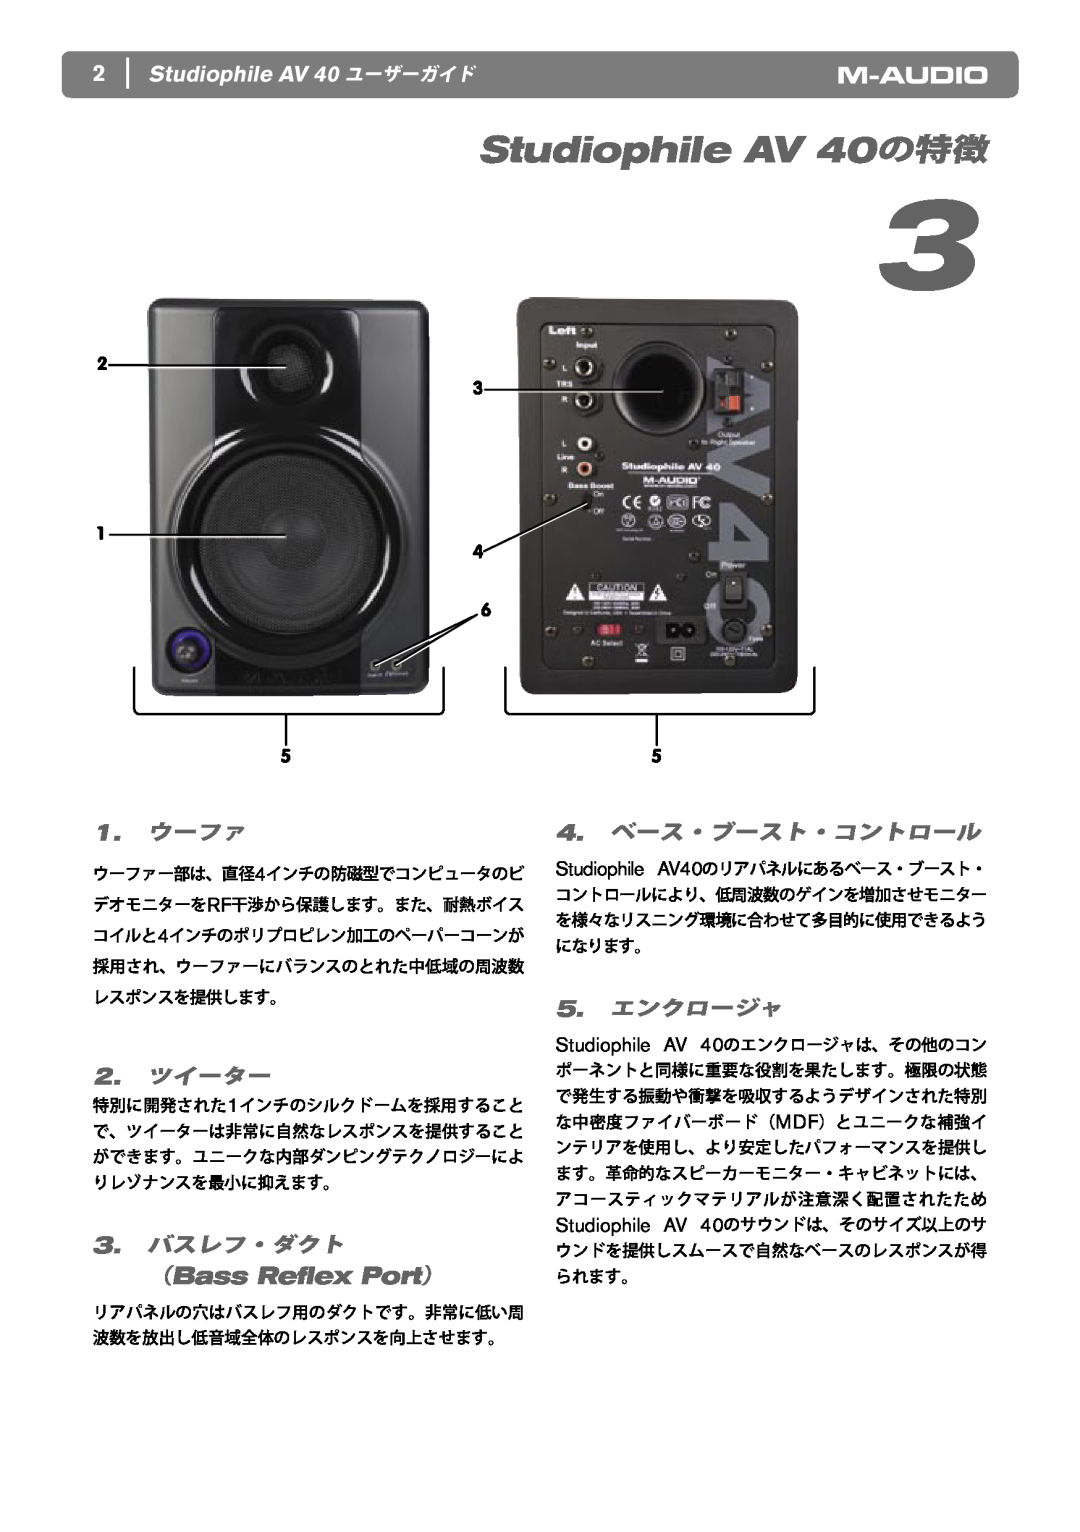 M-Audio Studiophile AV 40の特徴, Studiophile AV 40 ユーザーガイド, 1.ウーファ, 2.ツイーター, 3.バスレフ・ダクト, 4.ベース・ブースト・コントロール, 5.エンクロージャ 